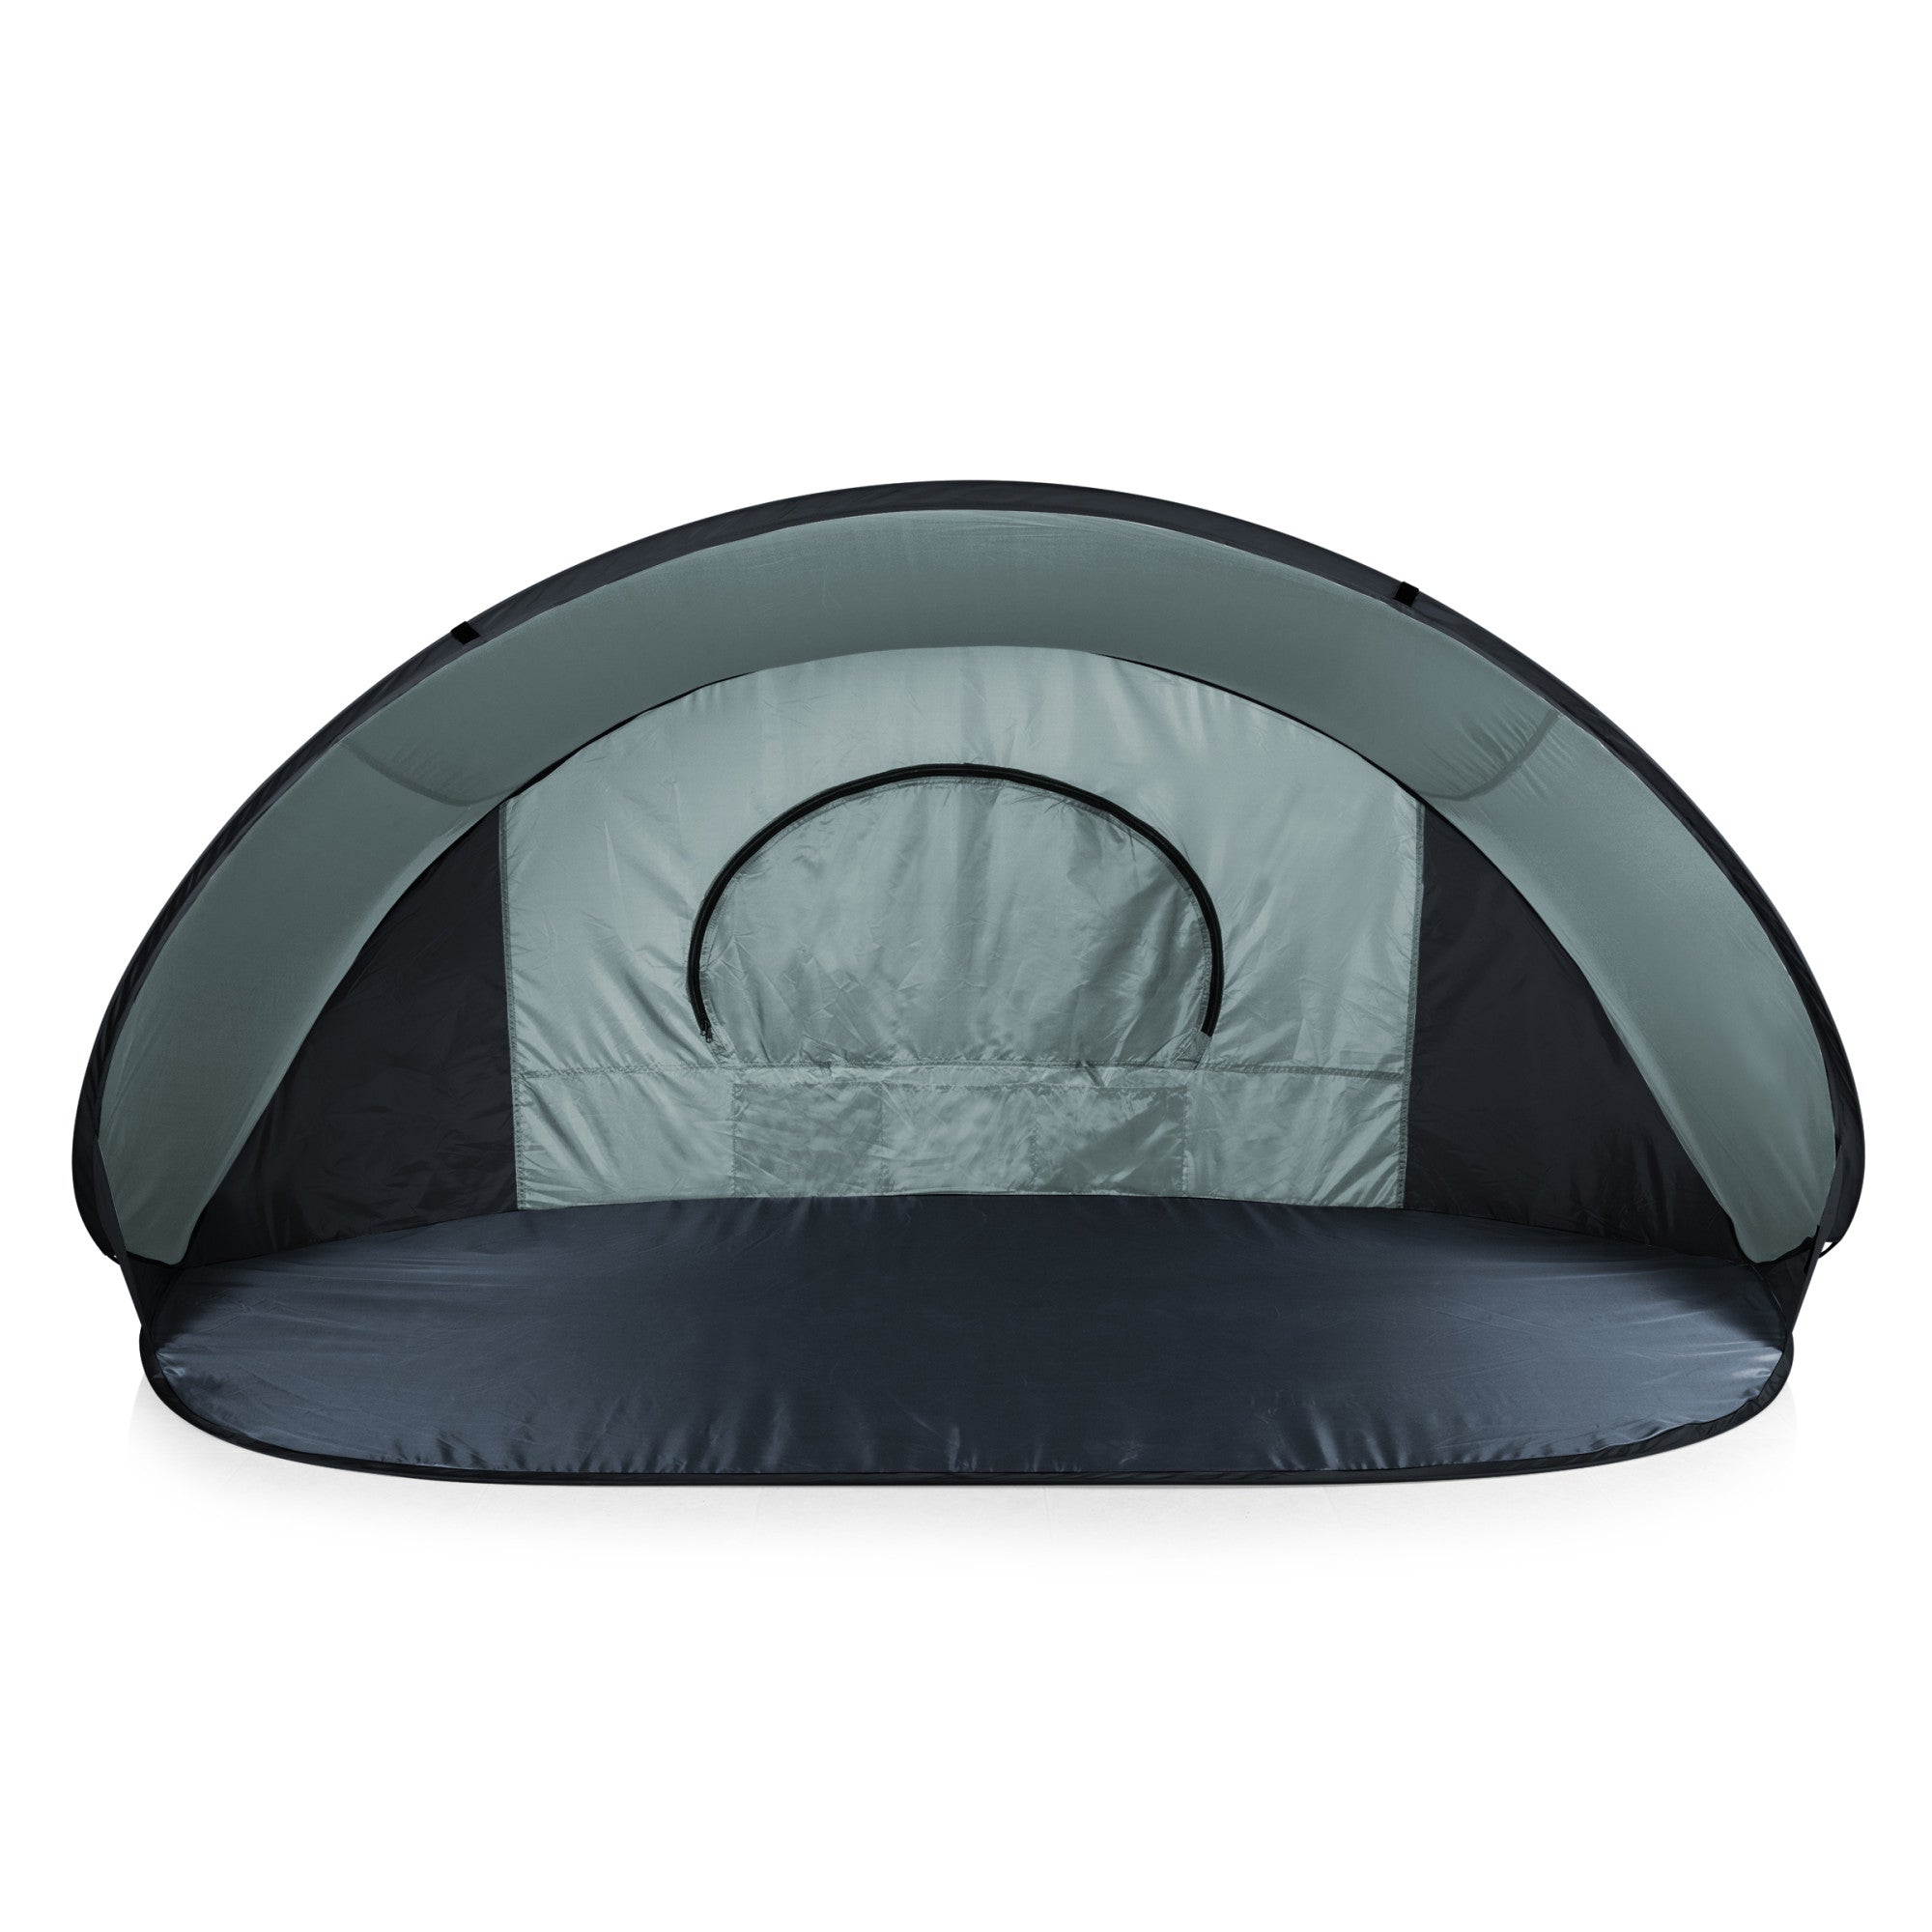 Penn State Nittany Lions - Manta Portable Beach Tent